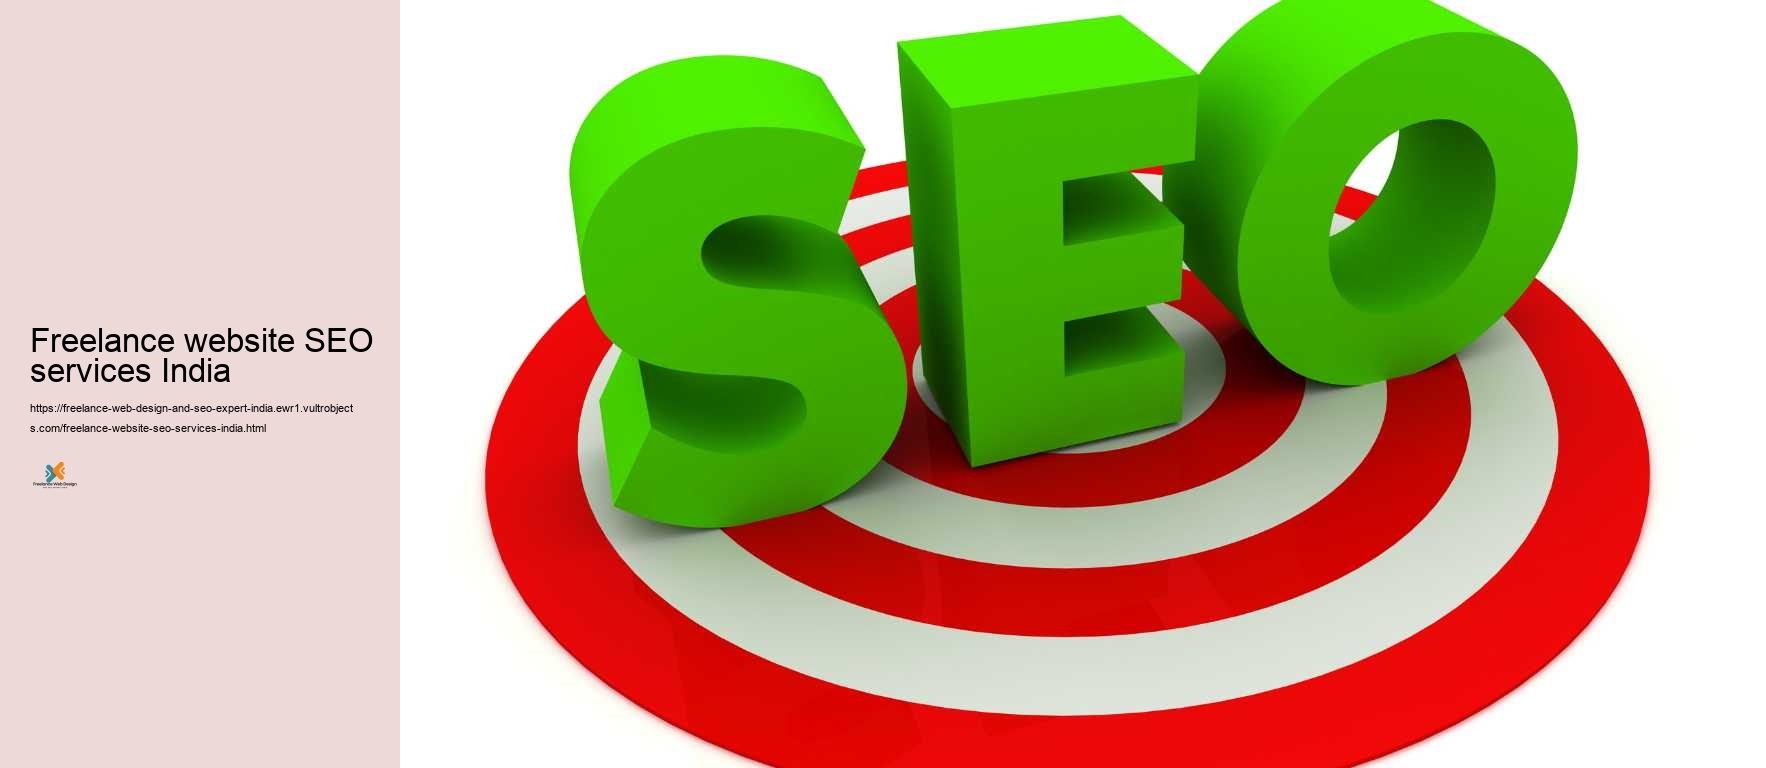 Freelance website SEO services India